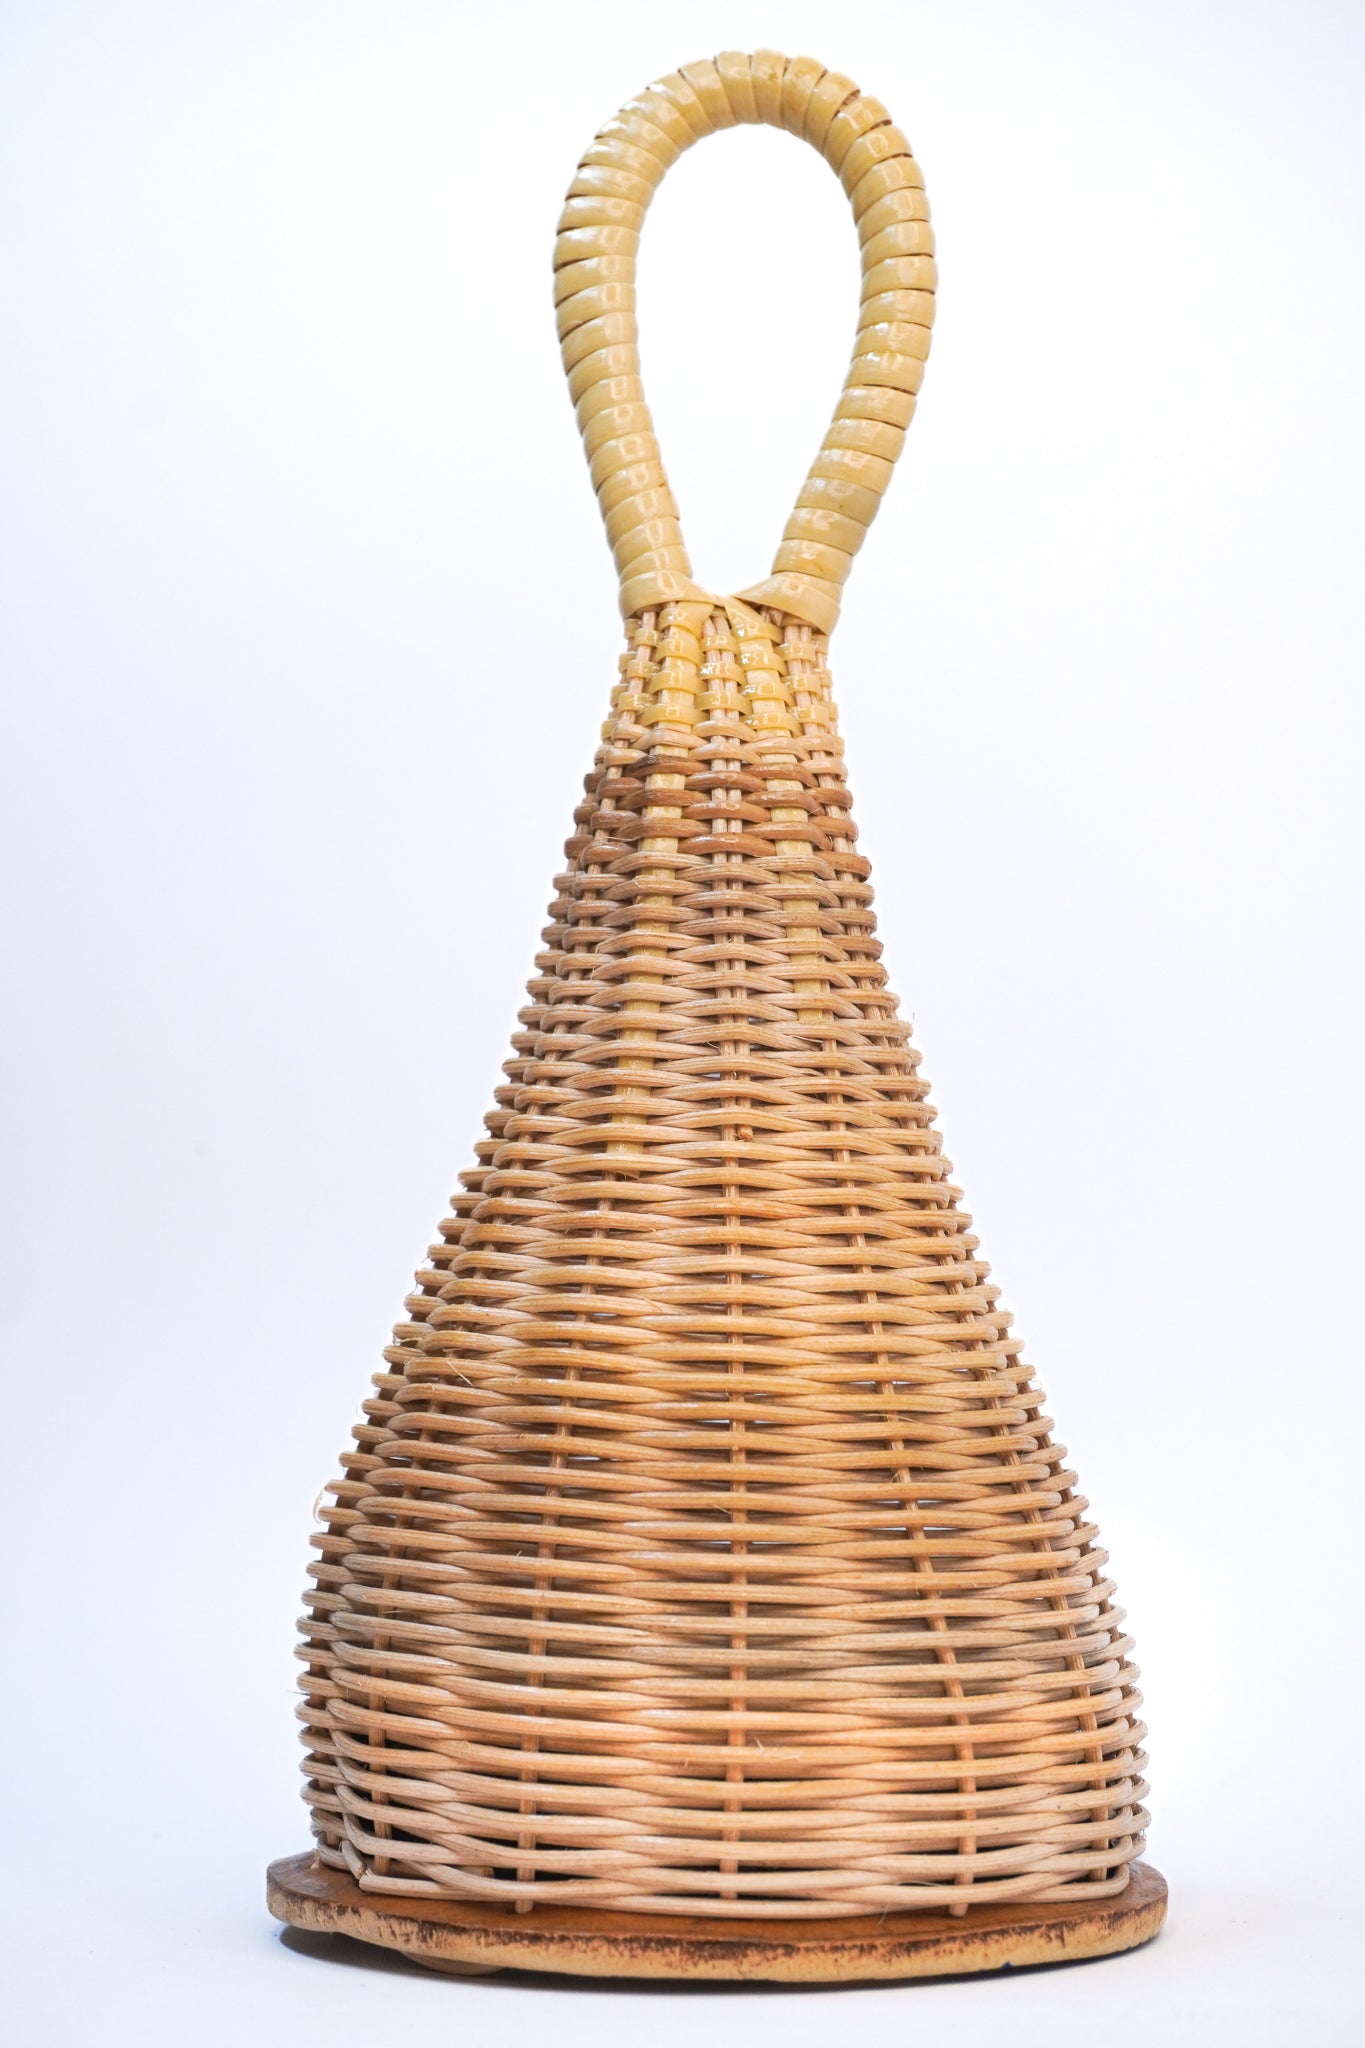 Caxixi - Naná Vasconcelos Tribute Model made of rattan